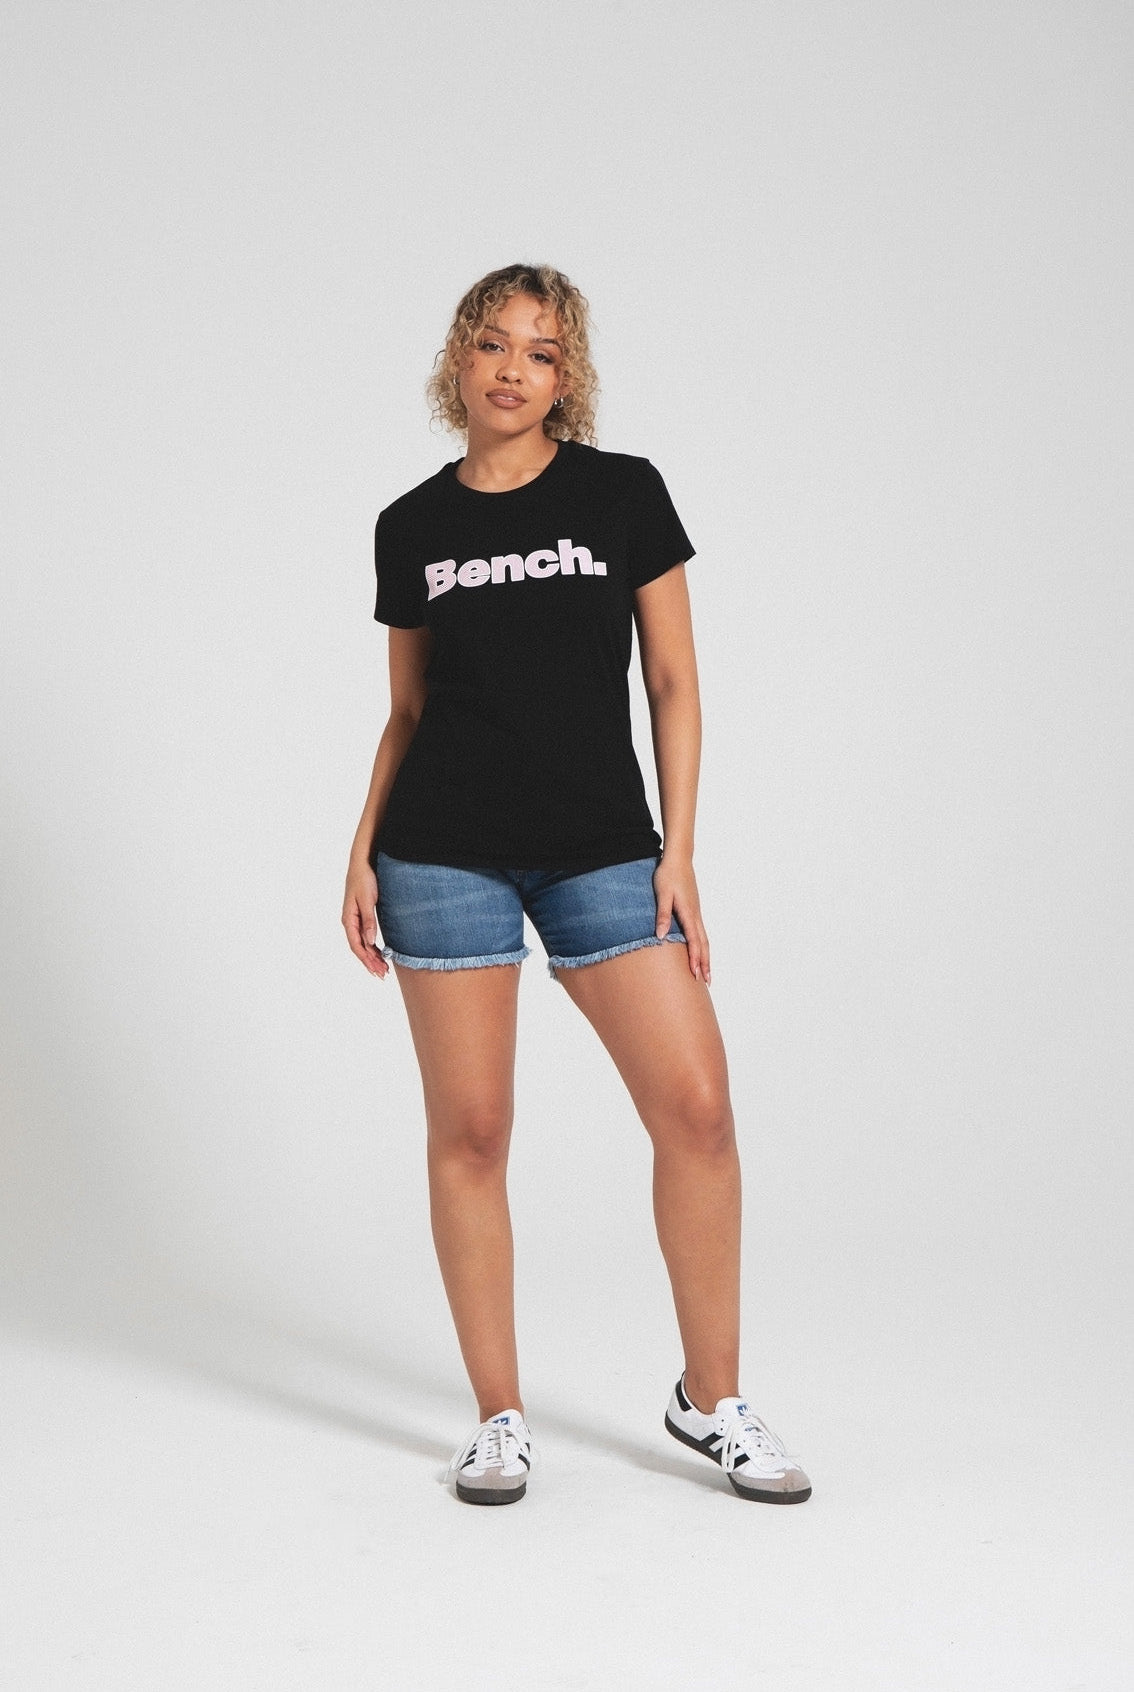 Womens 'LEORA' SS T-Shirt - BLACK - Shop at www.Bench.co.uk #LoveMyHood